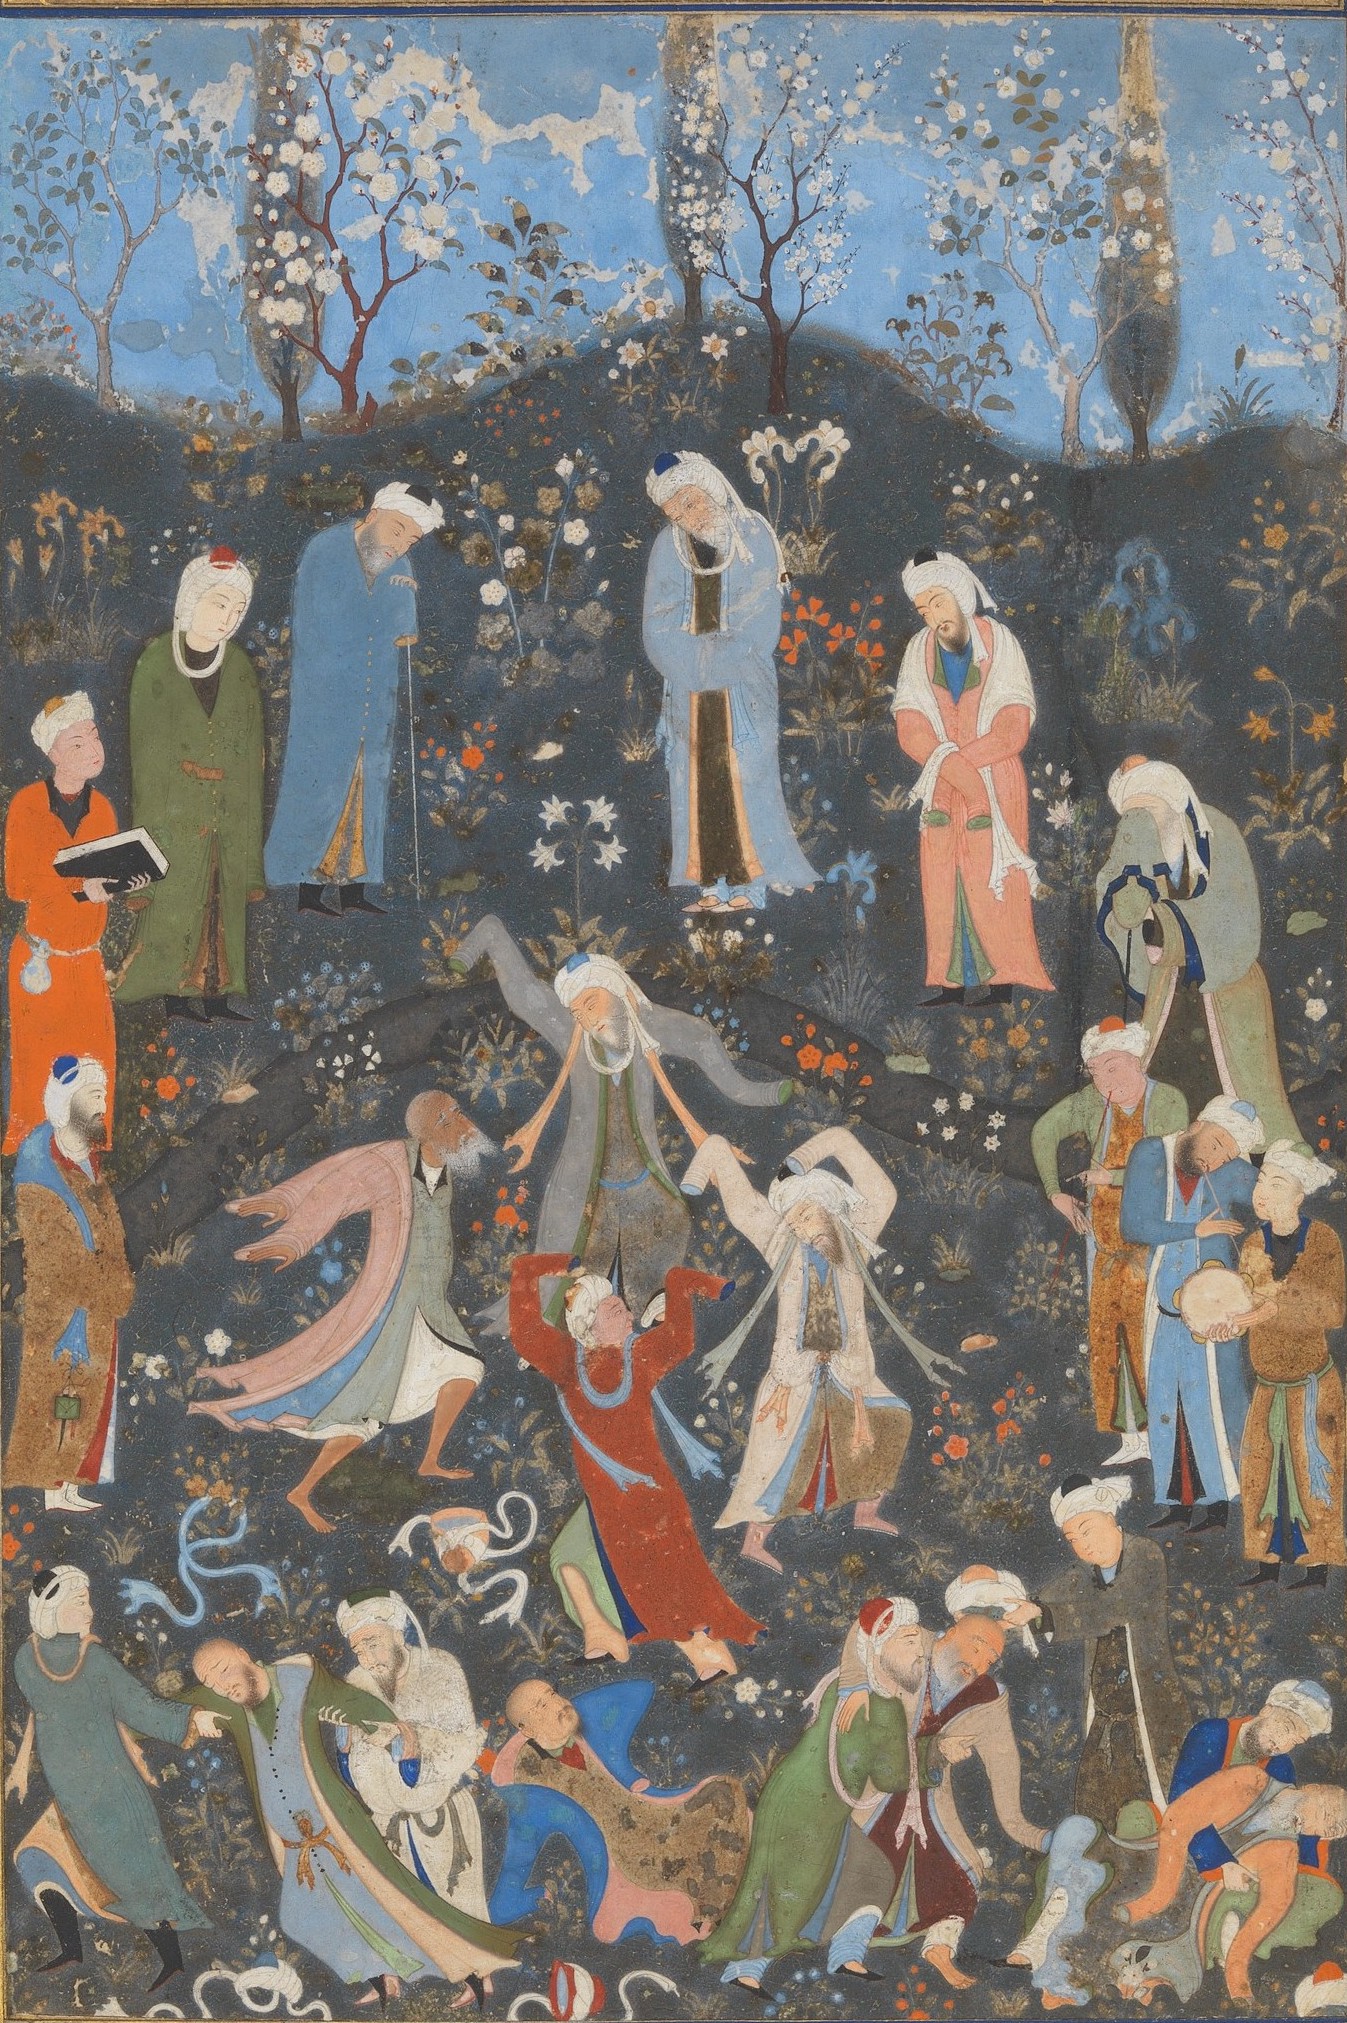 Dancing Sufi dervishes from the Divan of Hafiz, c. 1480. Metropolitan Museum of Art. Public Domain.